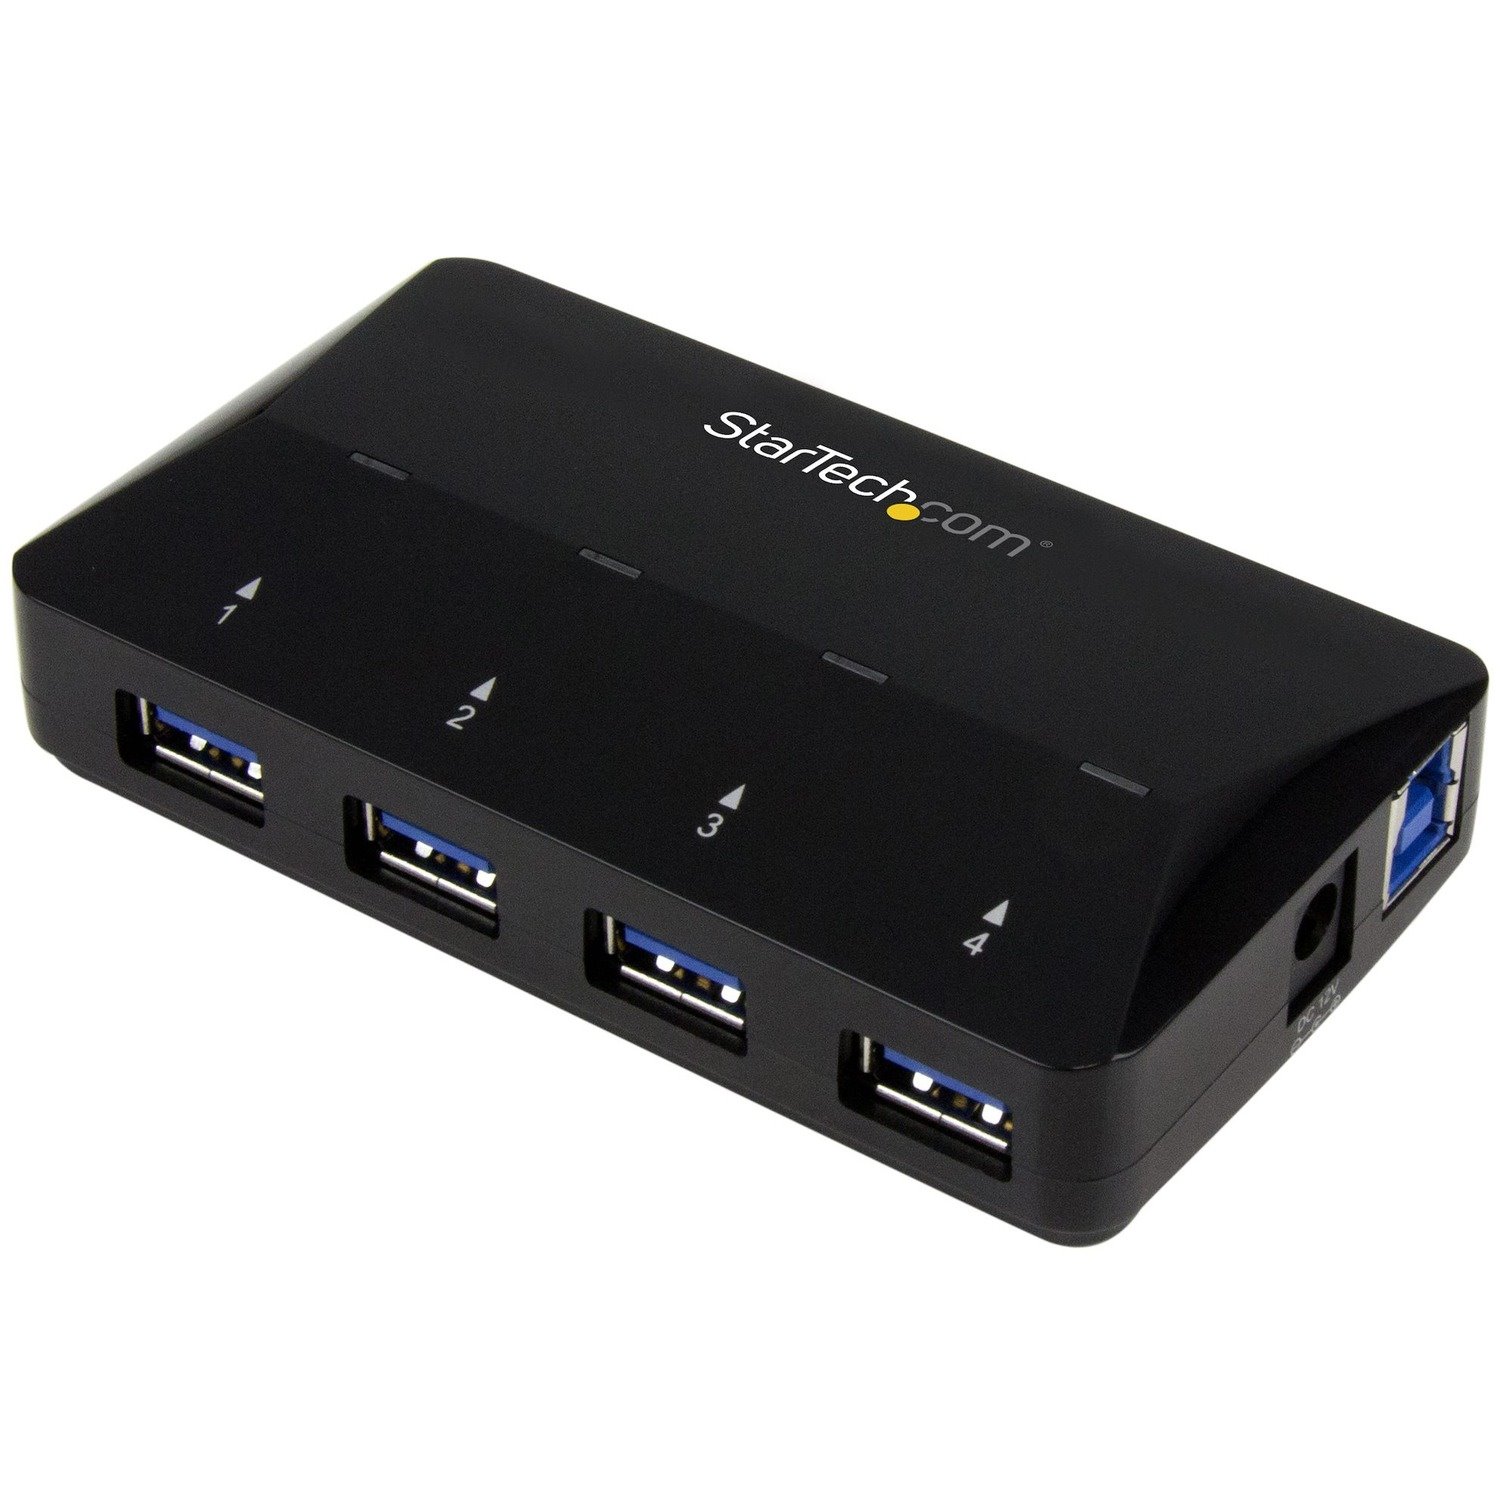 StarTech.com 4-Port USB 3.0 Hub plus Dedicated Charging Port - 5Gbps - 1 x 2.4A Port - Desktop USB Hub and Fast-Charging Station